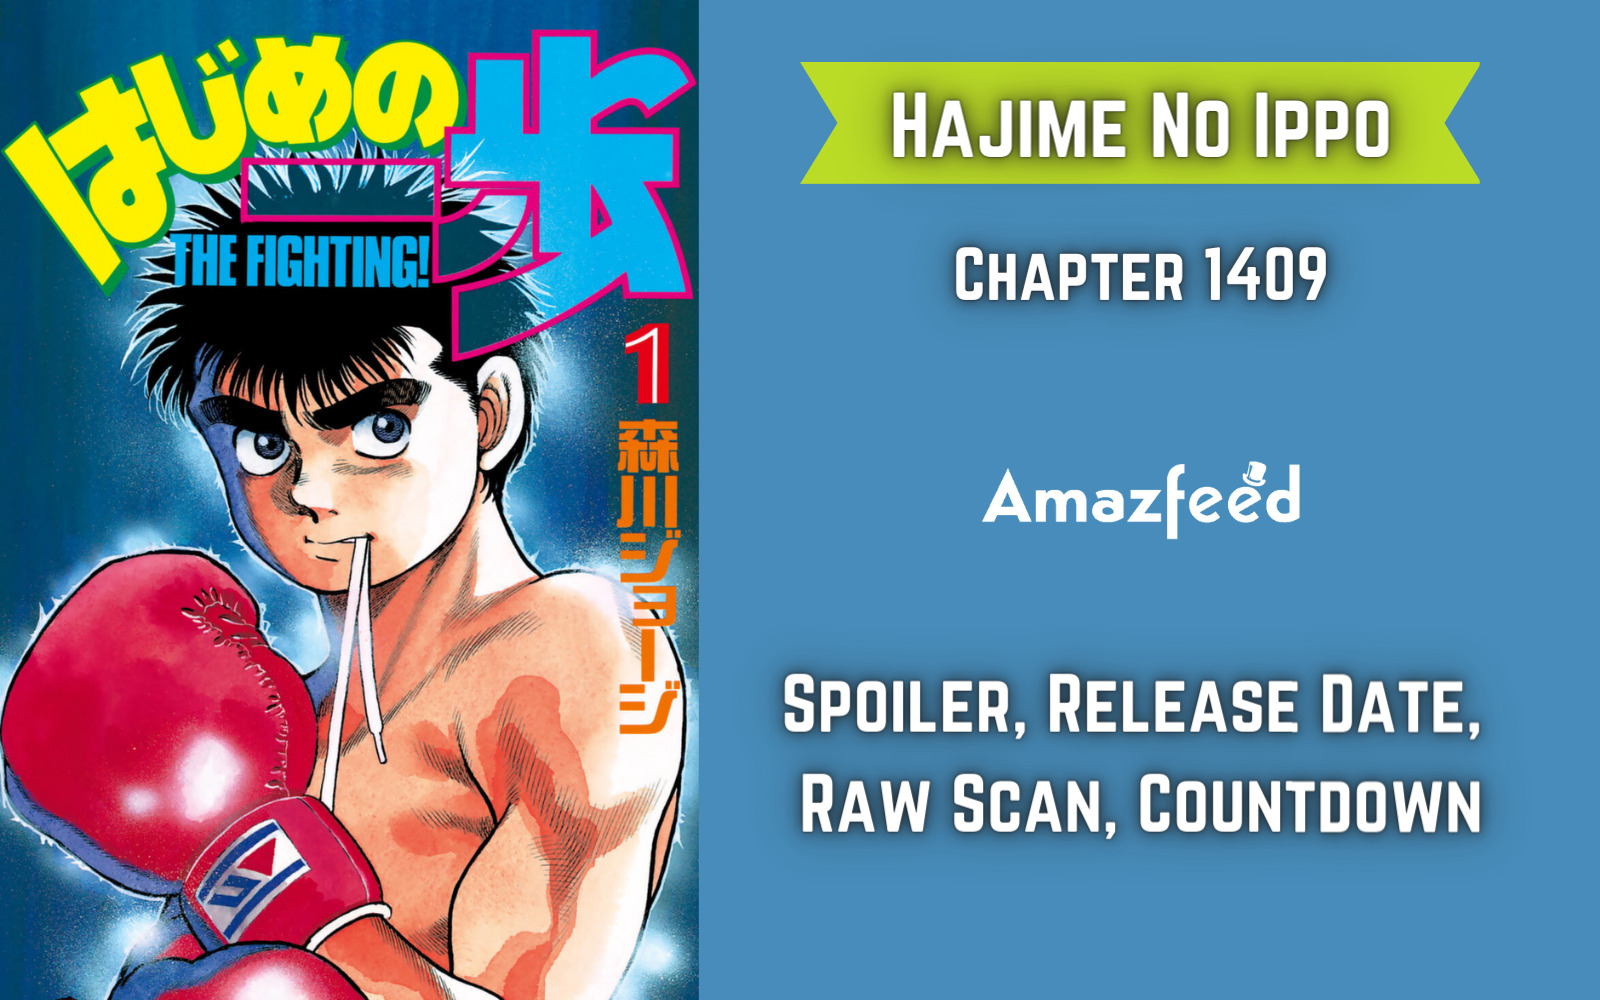 Hajime No Ippo Chapter 1409 Spoiler, Raw Scan, Release Date